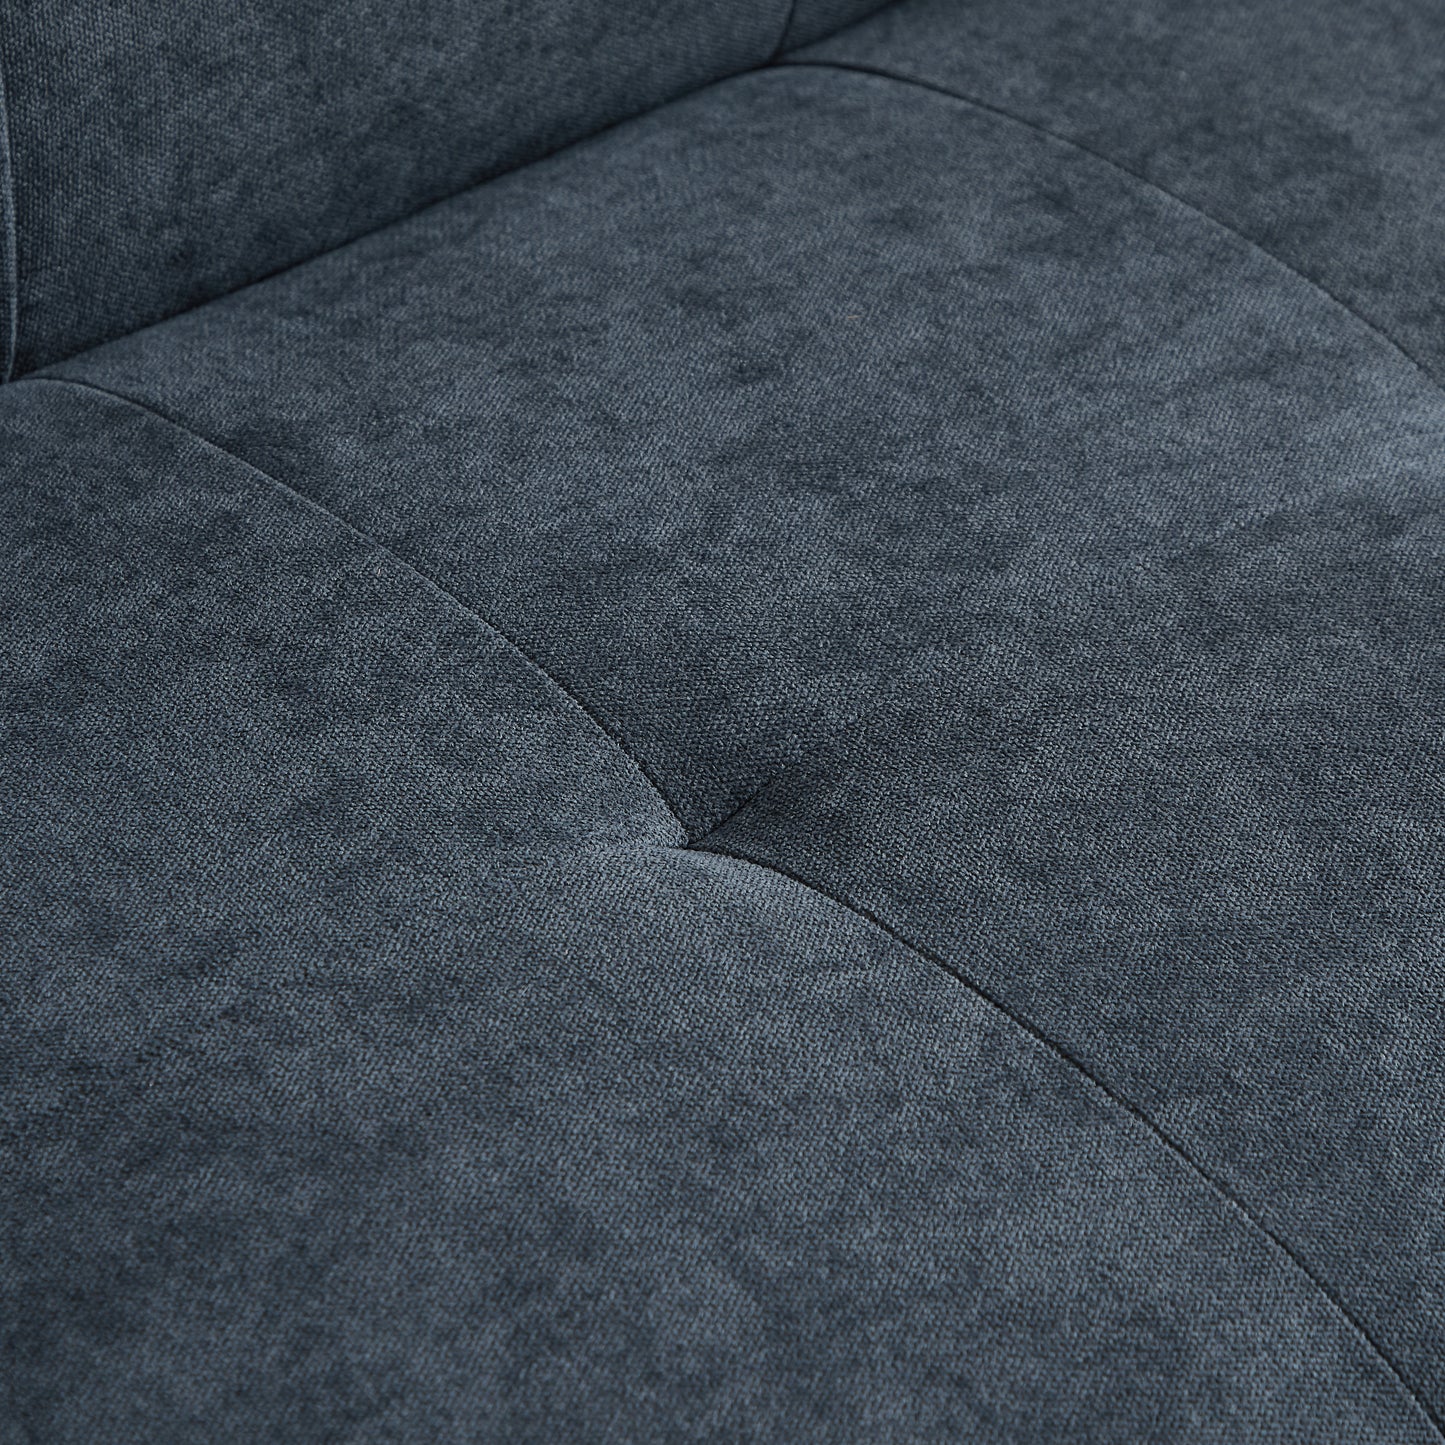 2186 MILTOŃ sofa bed